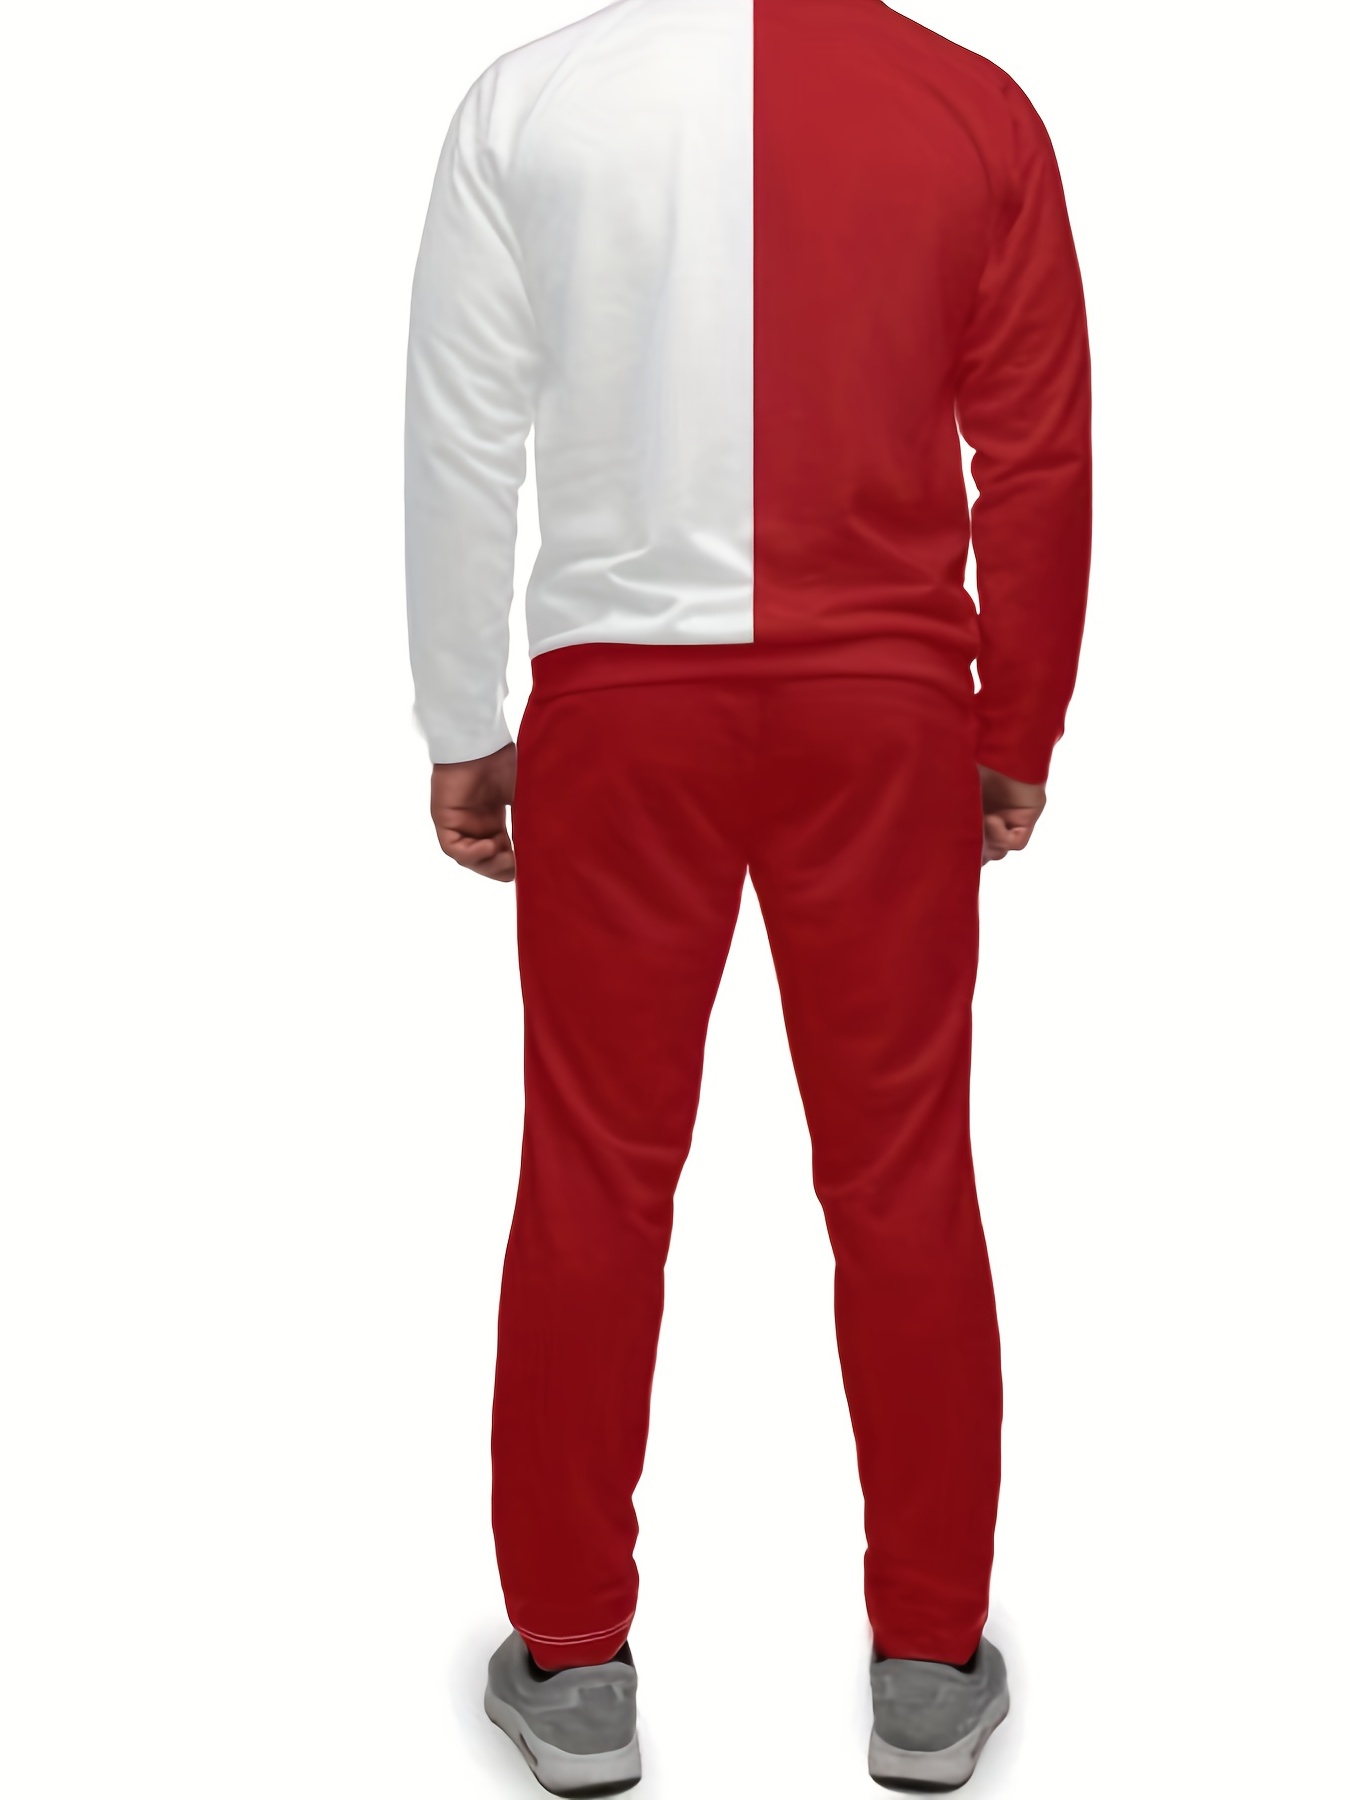 Pantalones Sudadera Hombre Completo Póker Chándal Slim Moda Rojo